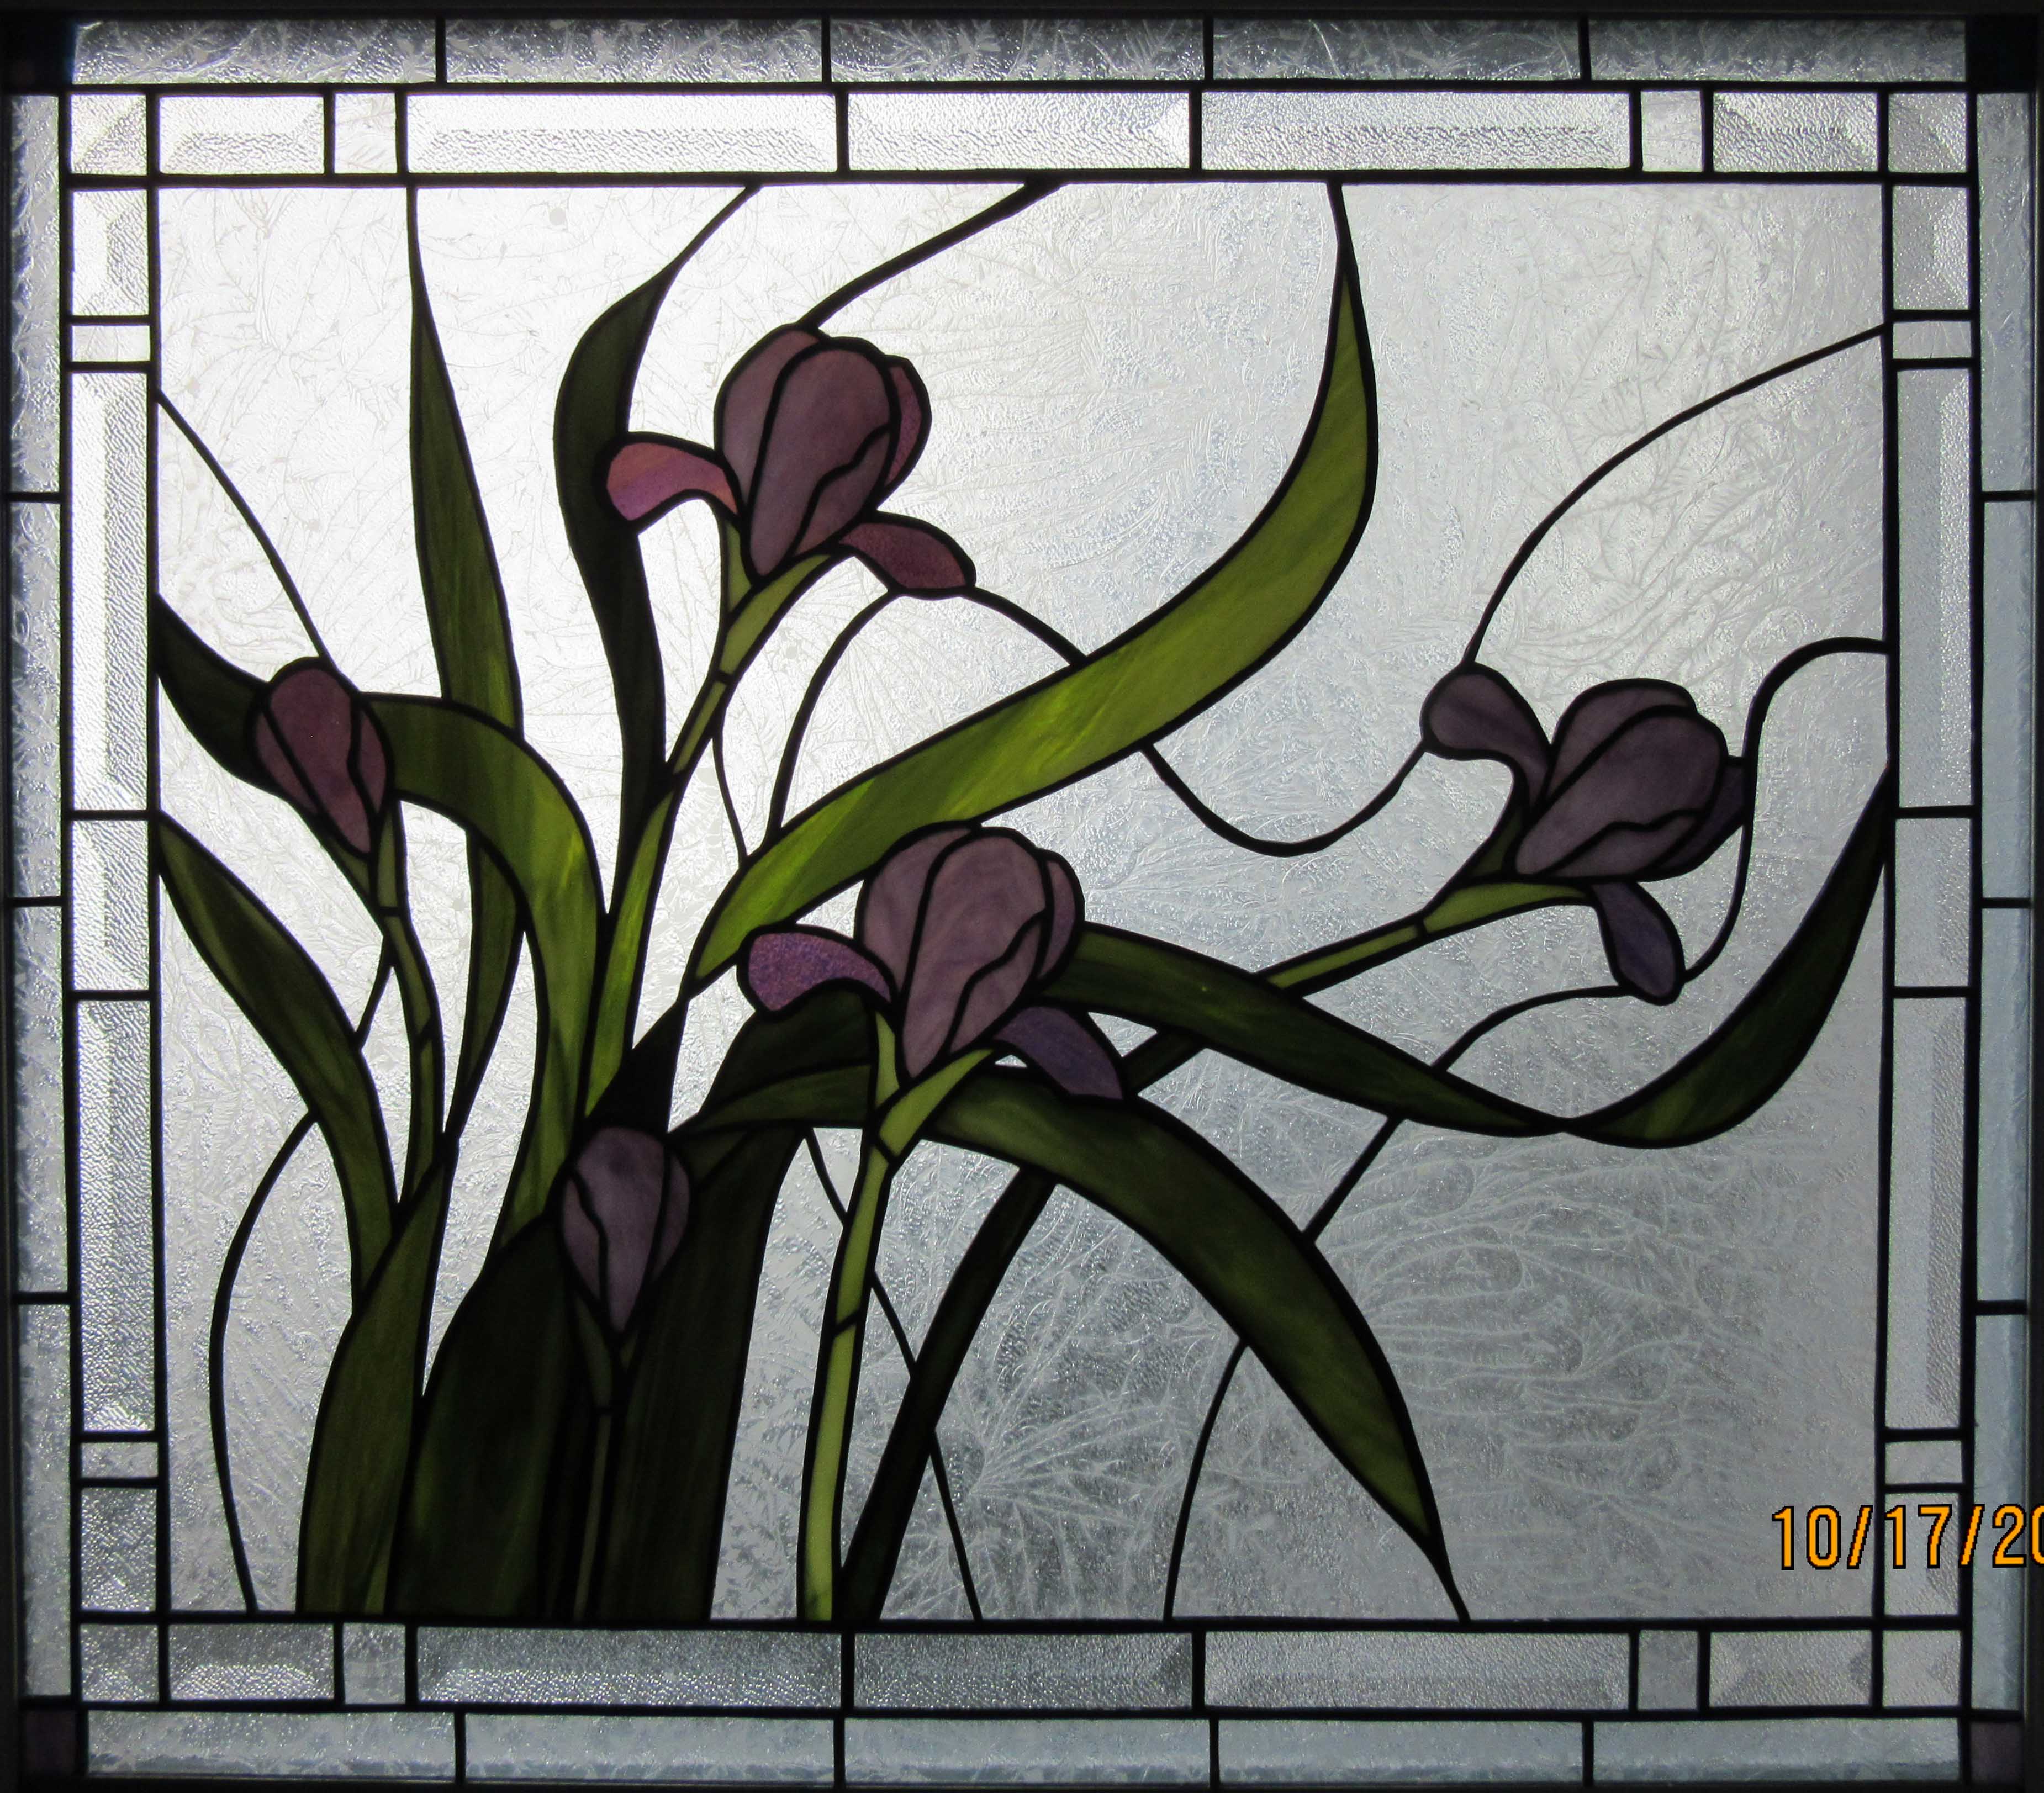 Iris Window Pane 2014